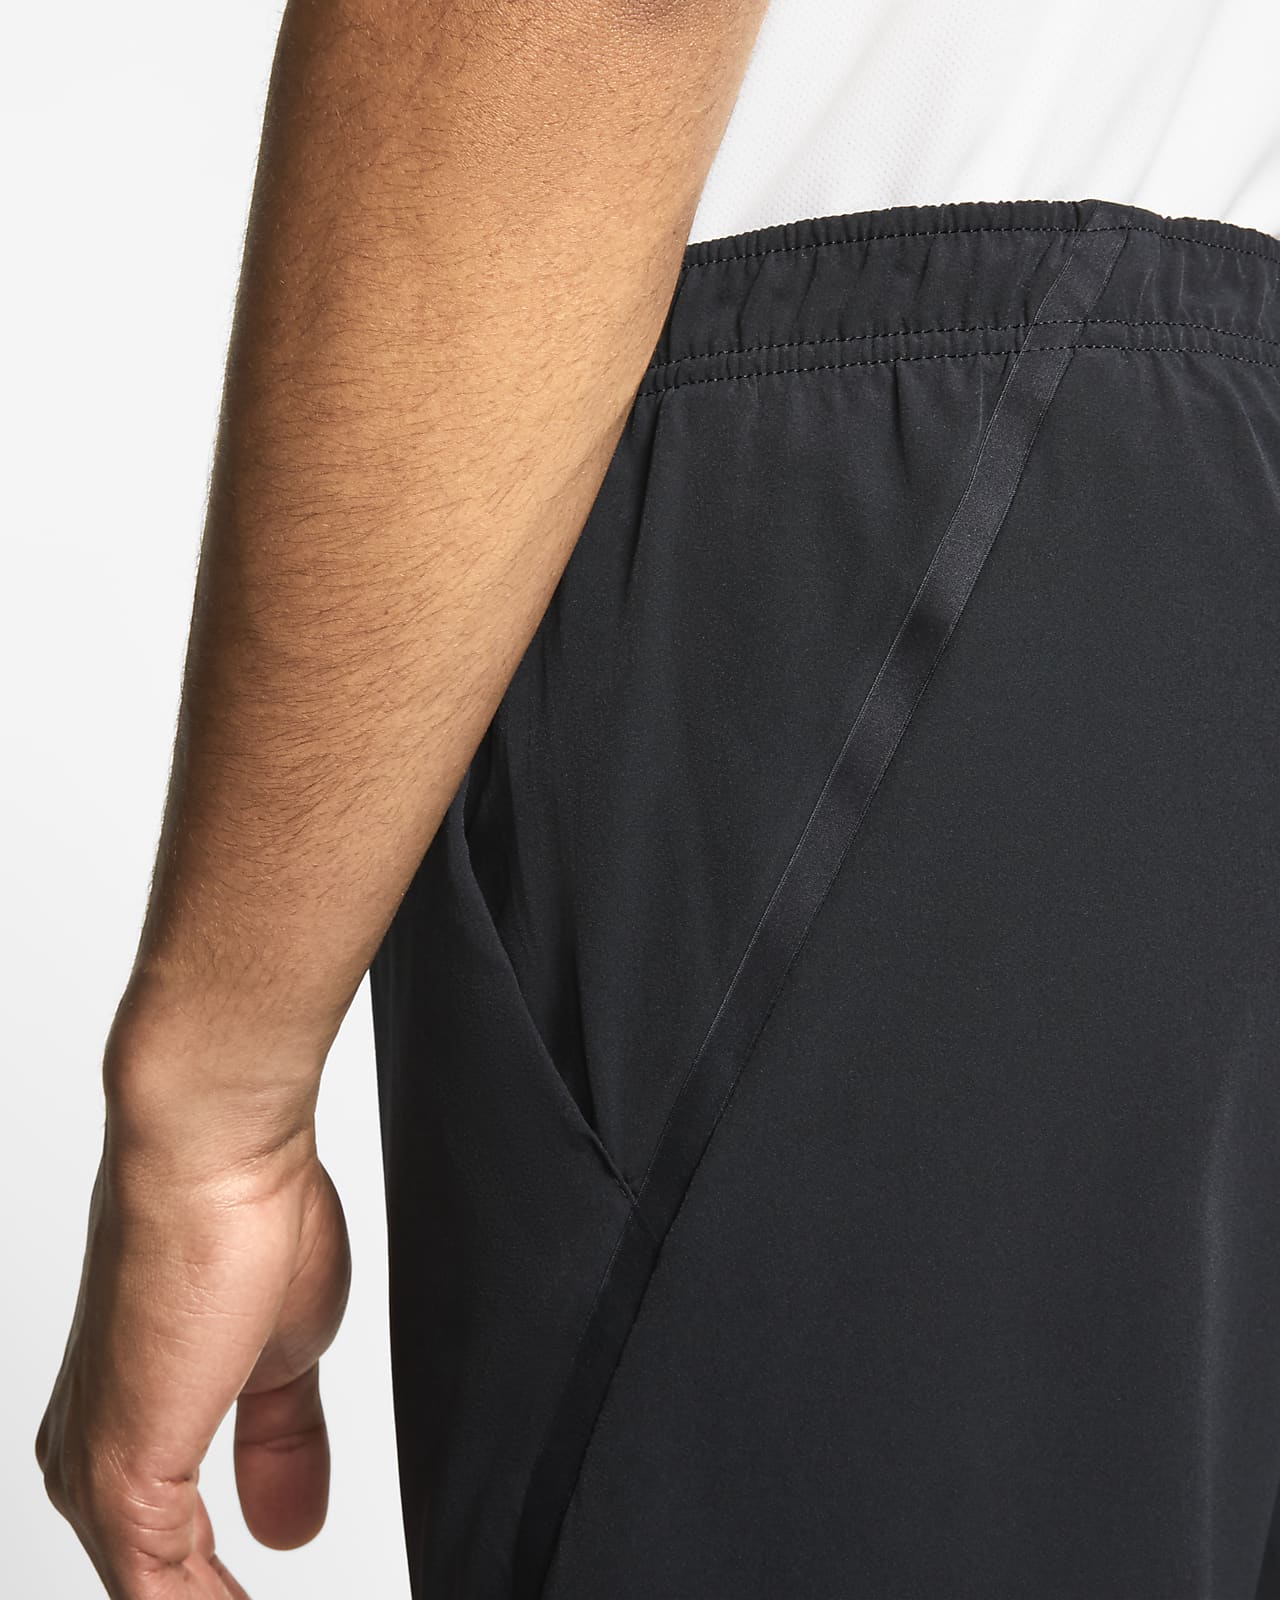 Nike Boys' Court Flex Ace Shorts (Black/White)